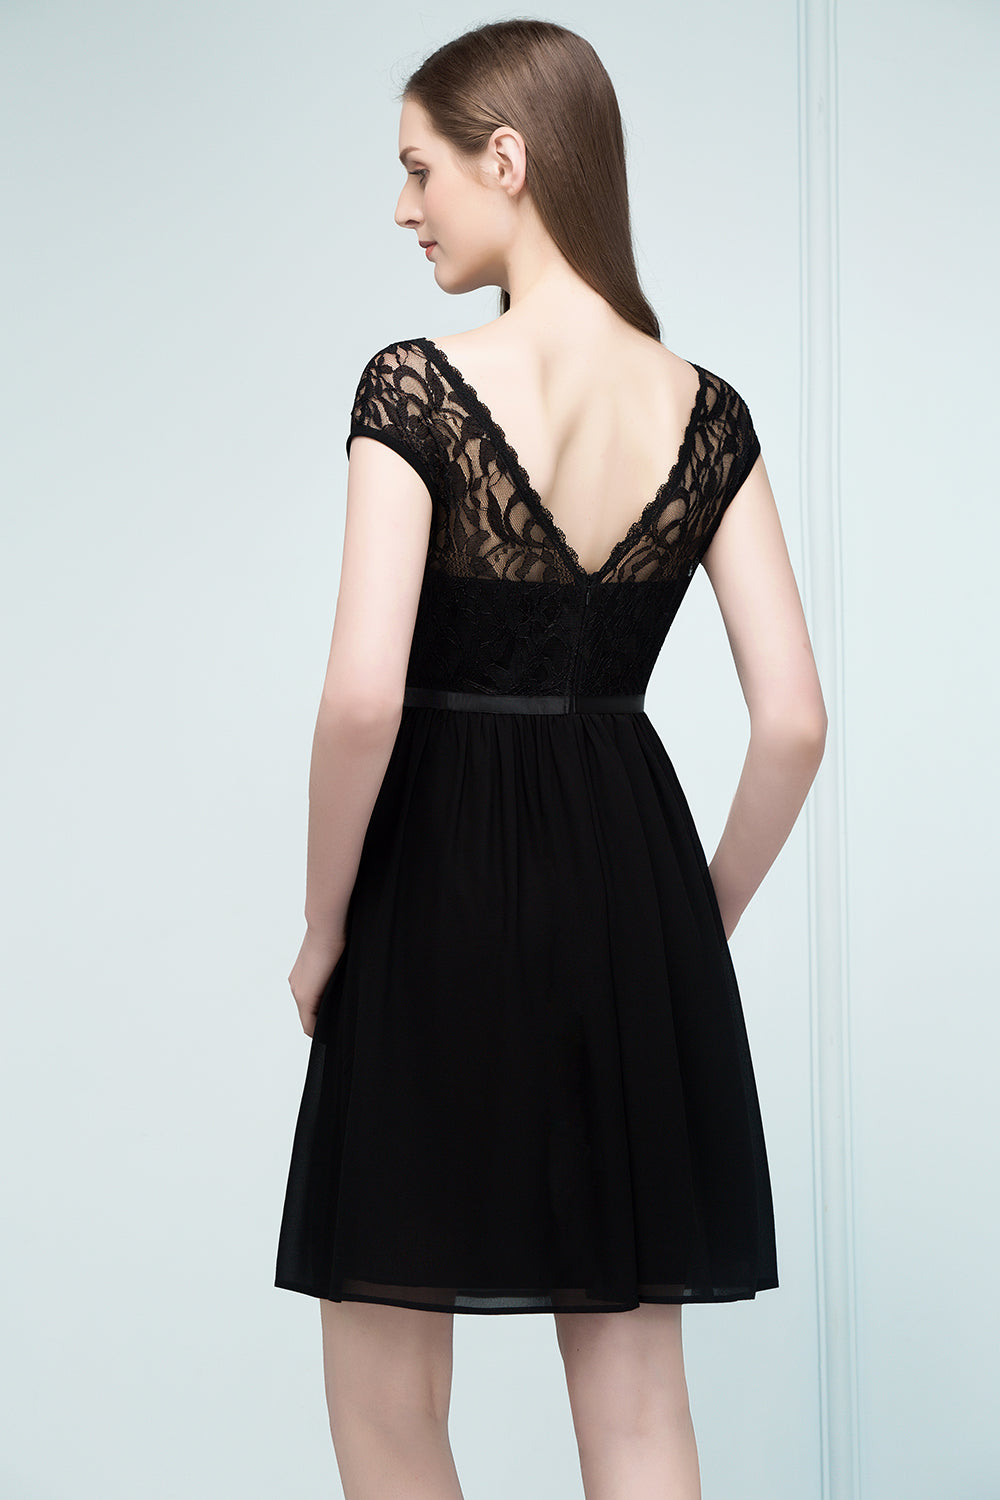 Pretty Scoop Sleeveless Black Lace Short Junior Bridesmaid Dress-27dress